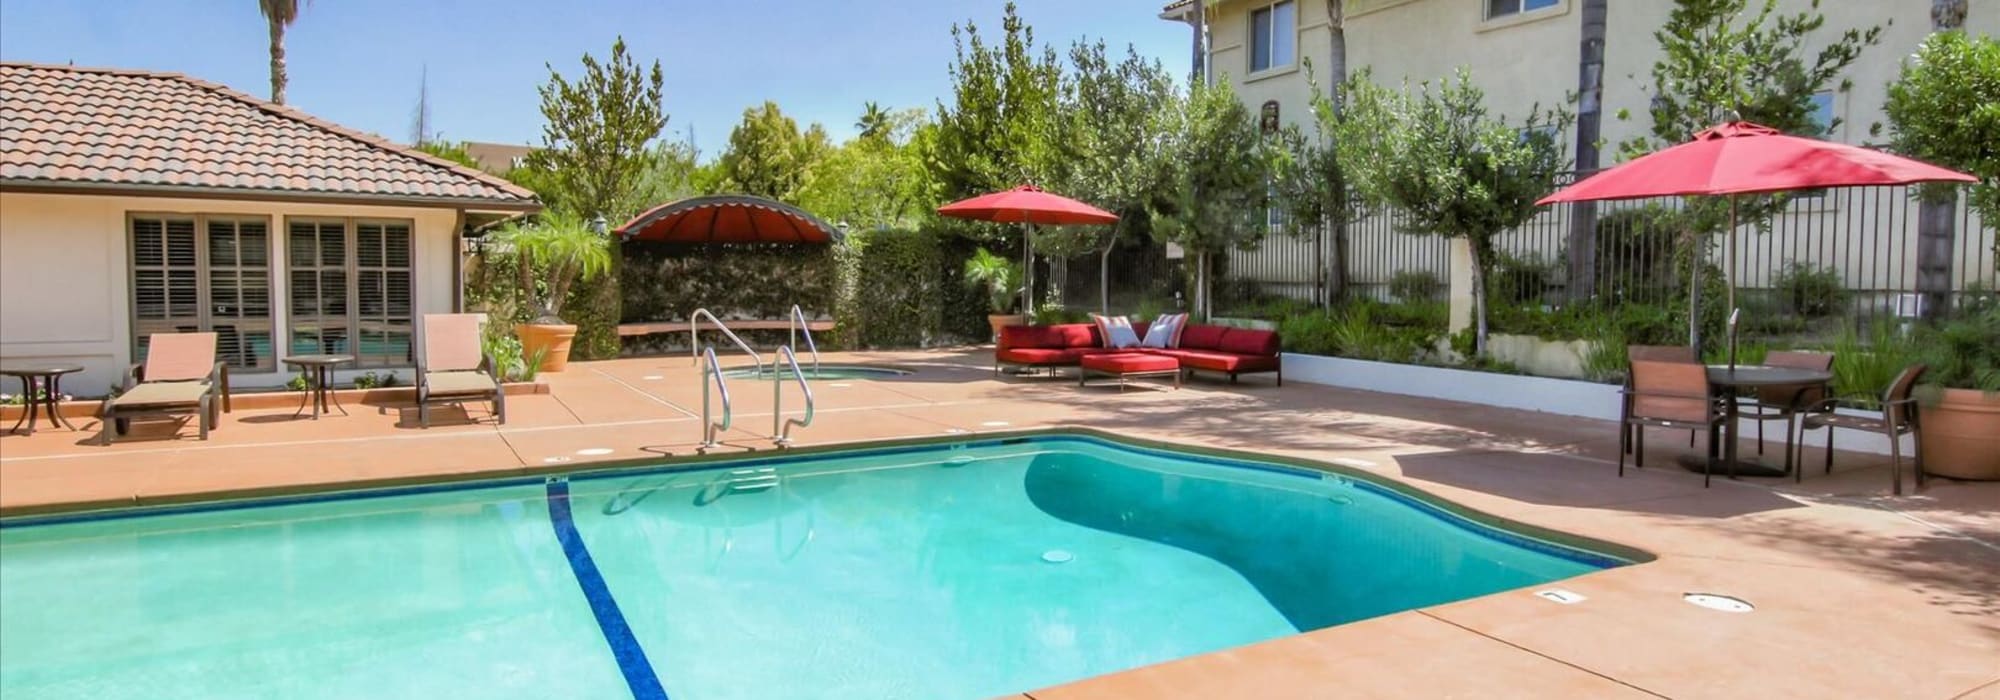 Resort-style swimming pool at Park Sorrento in Bakersfield, California